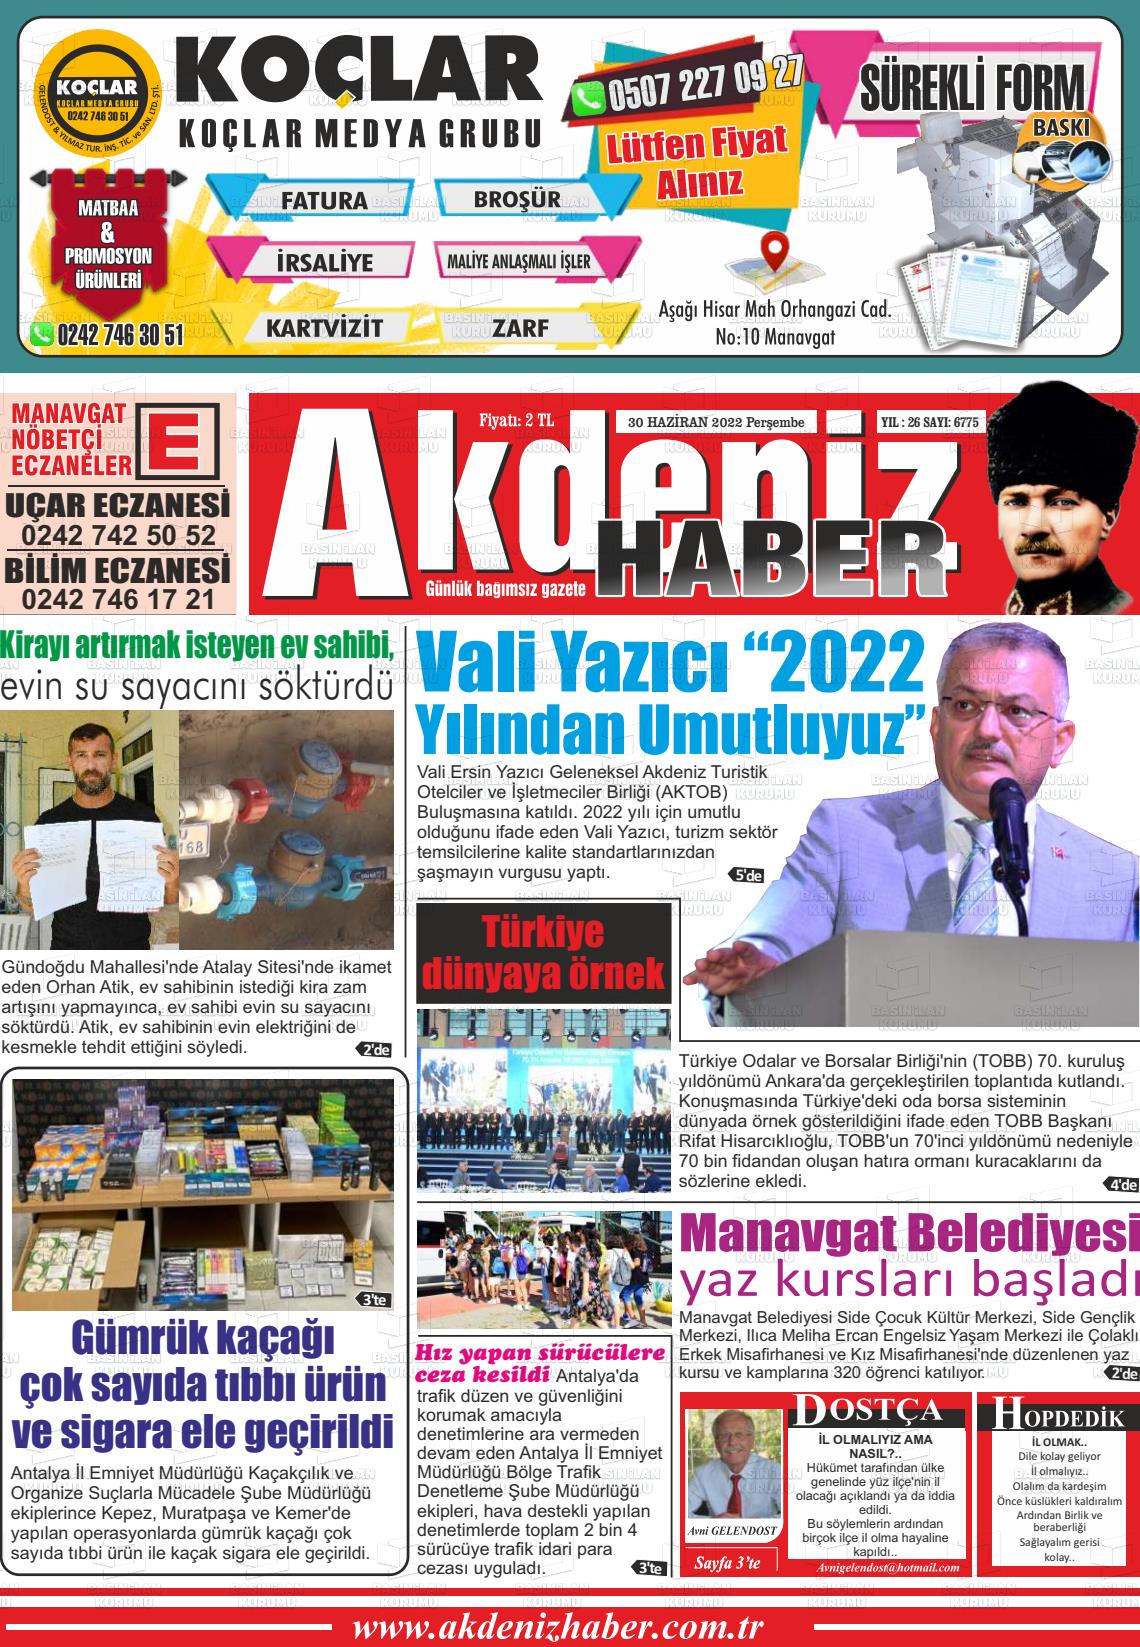 30 Haziran 2022 Akdeniz Haber Gazete Manşeti